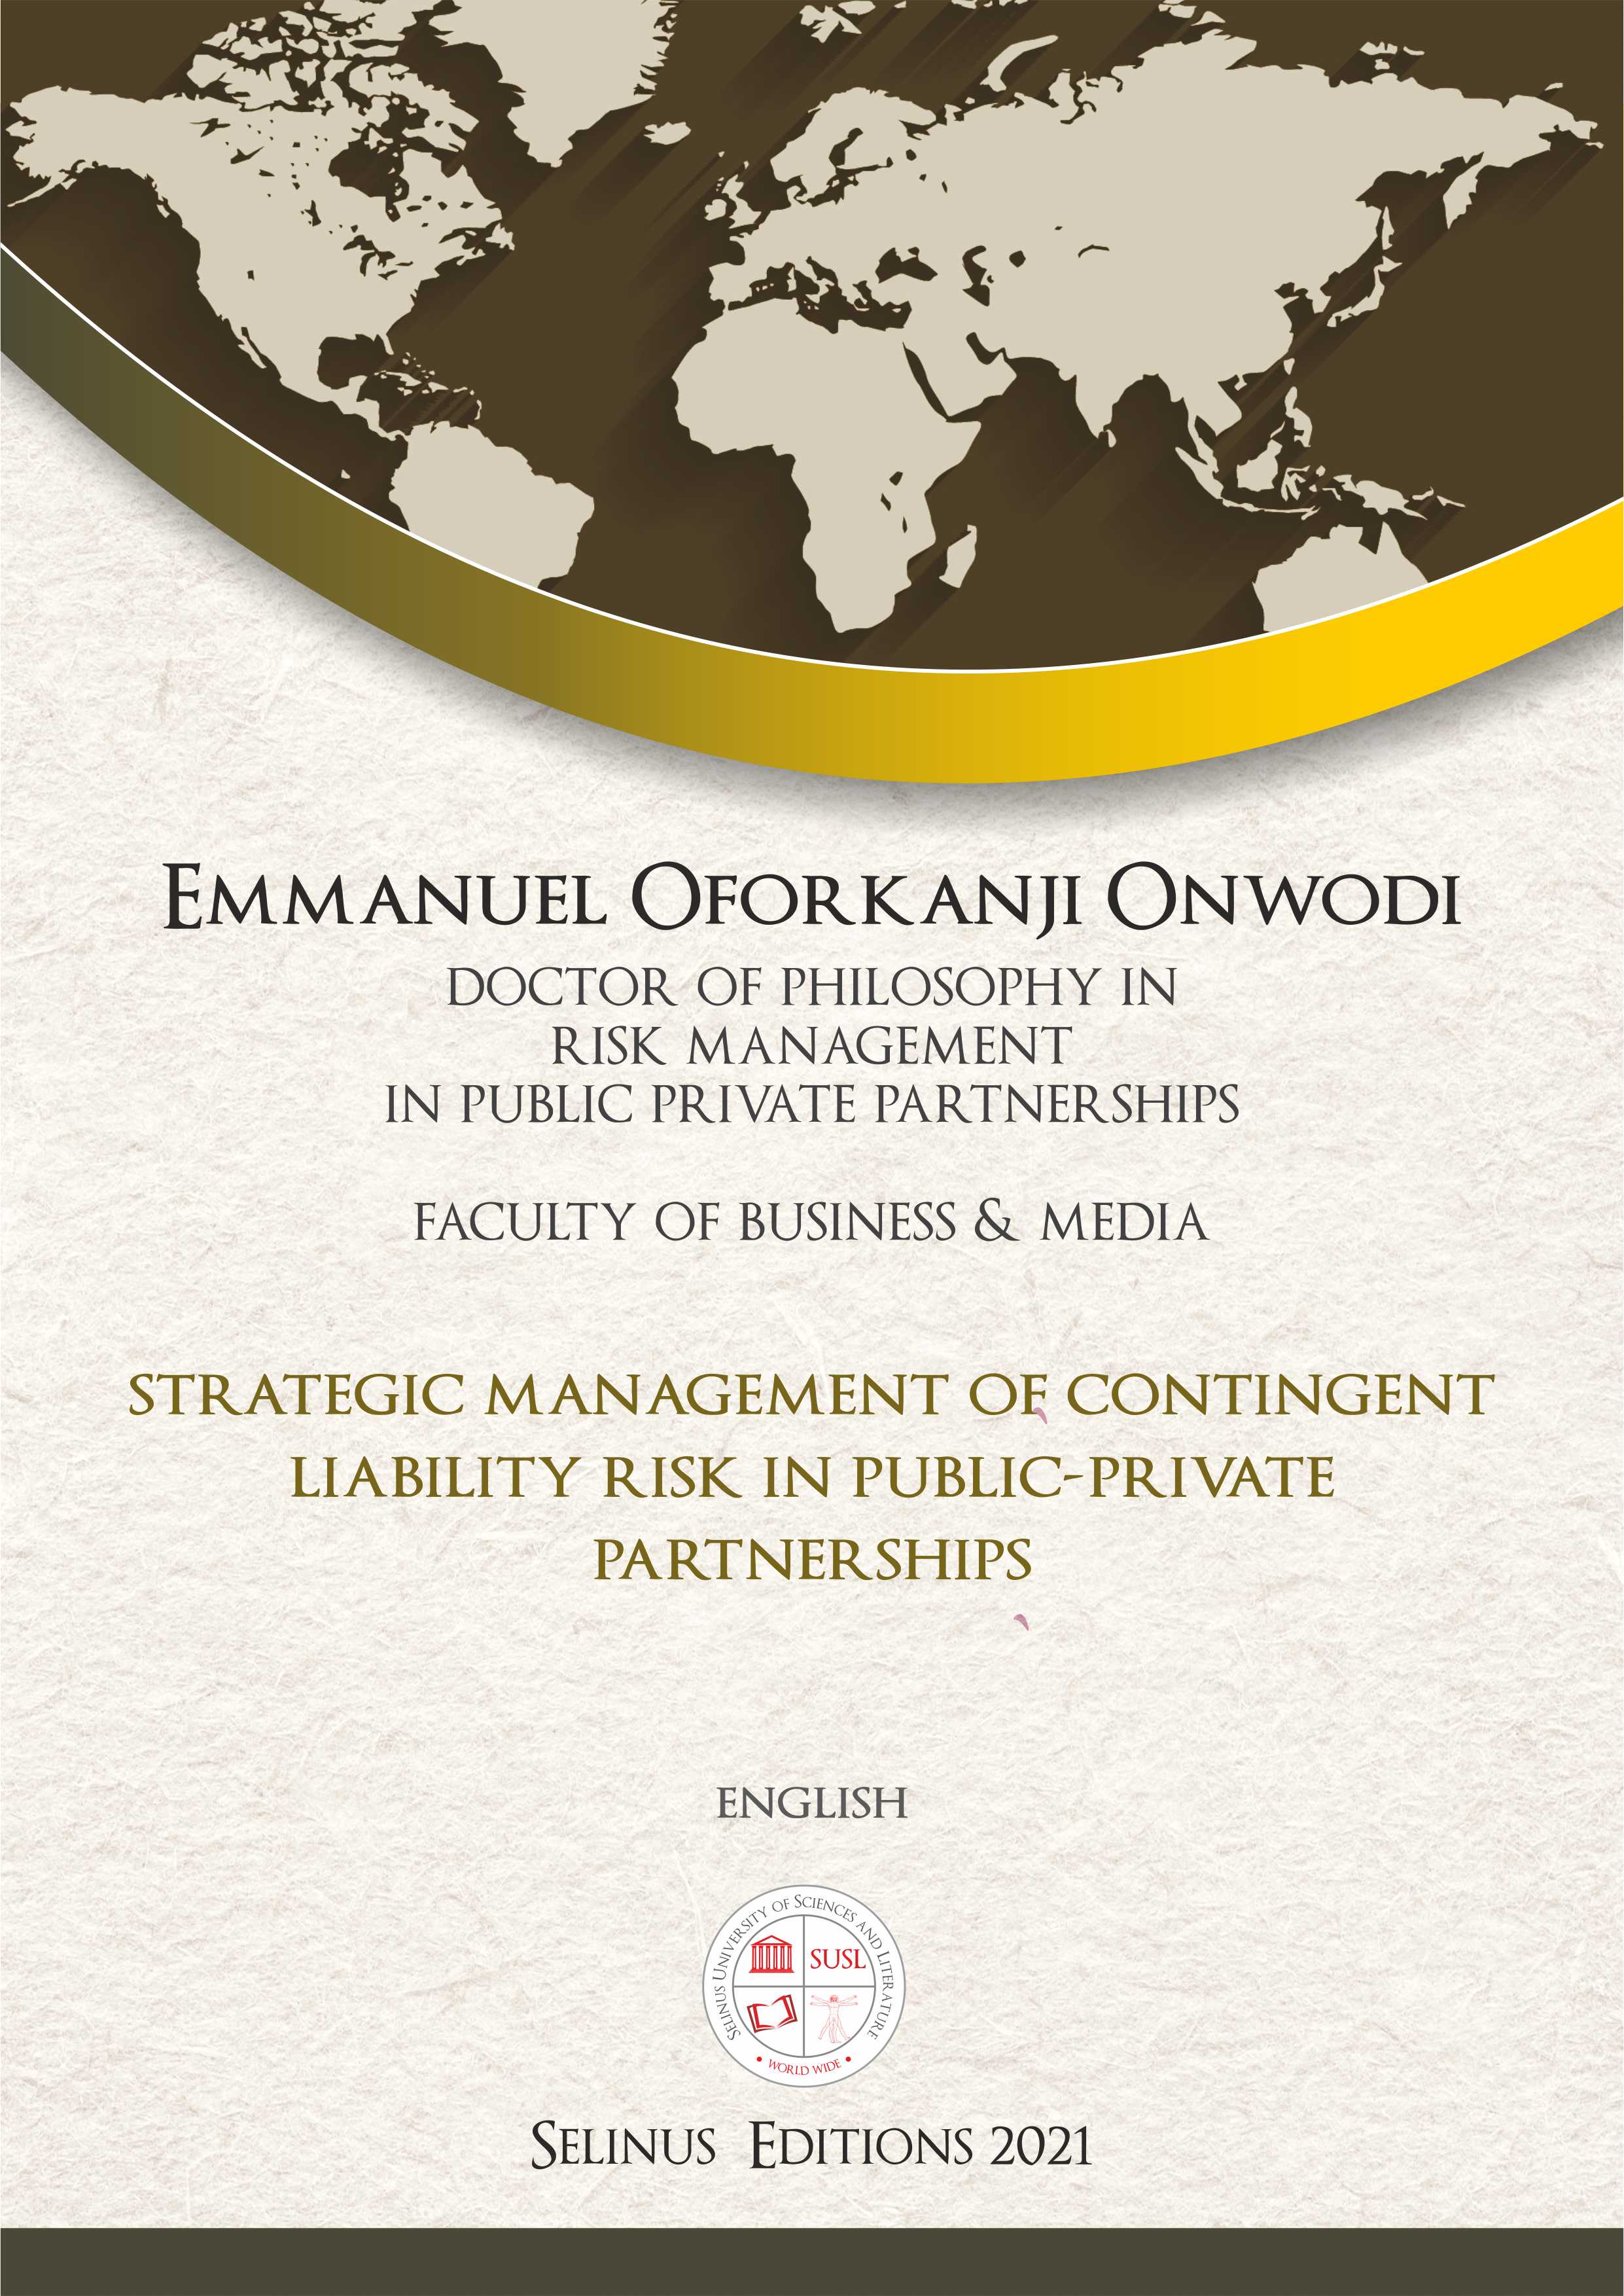 Thesis Emmanuel Oforkanji Onwodi